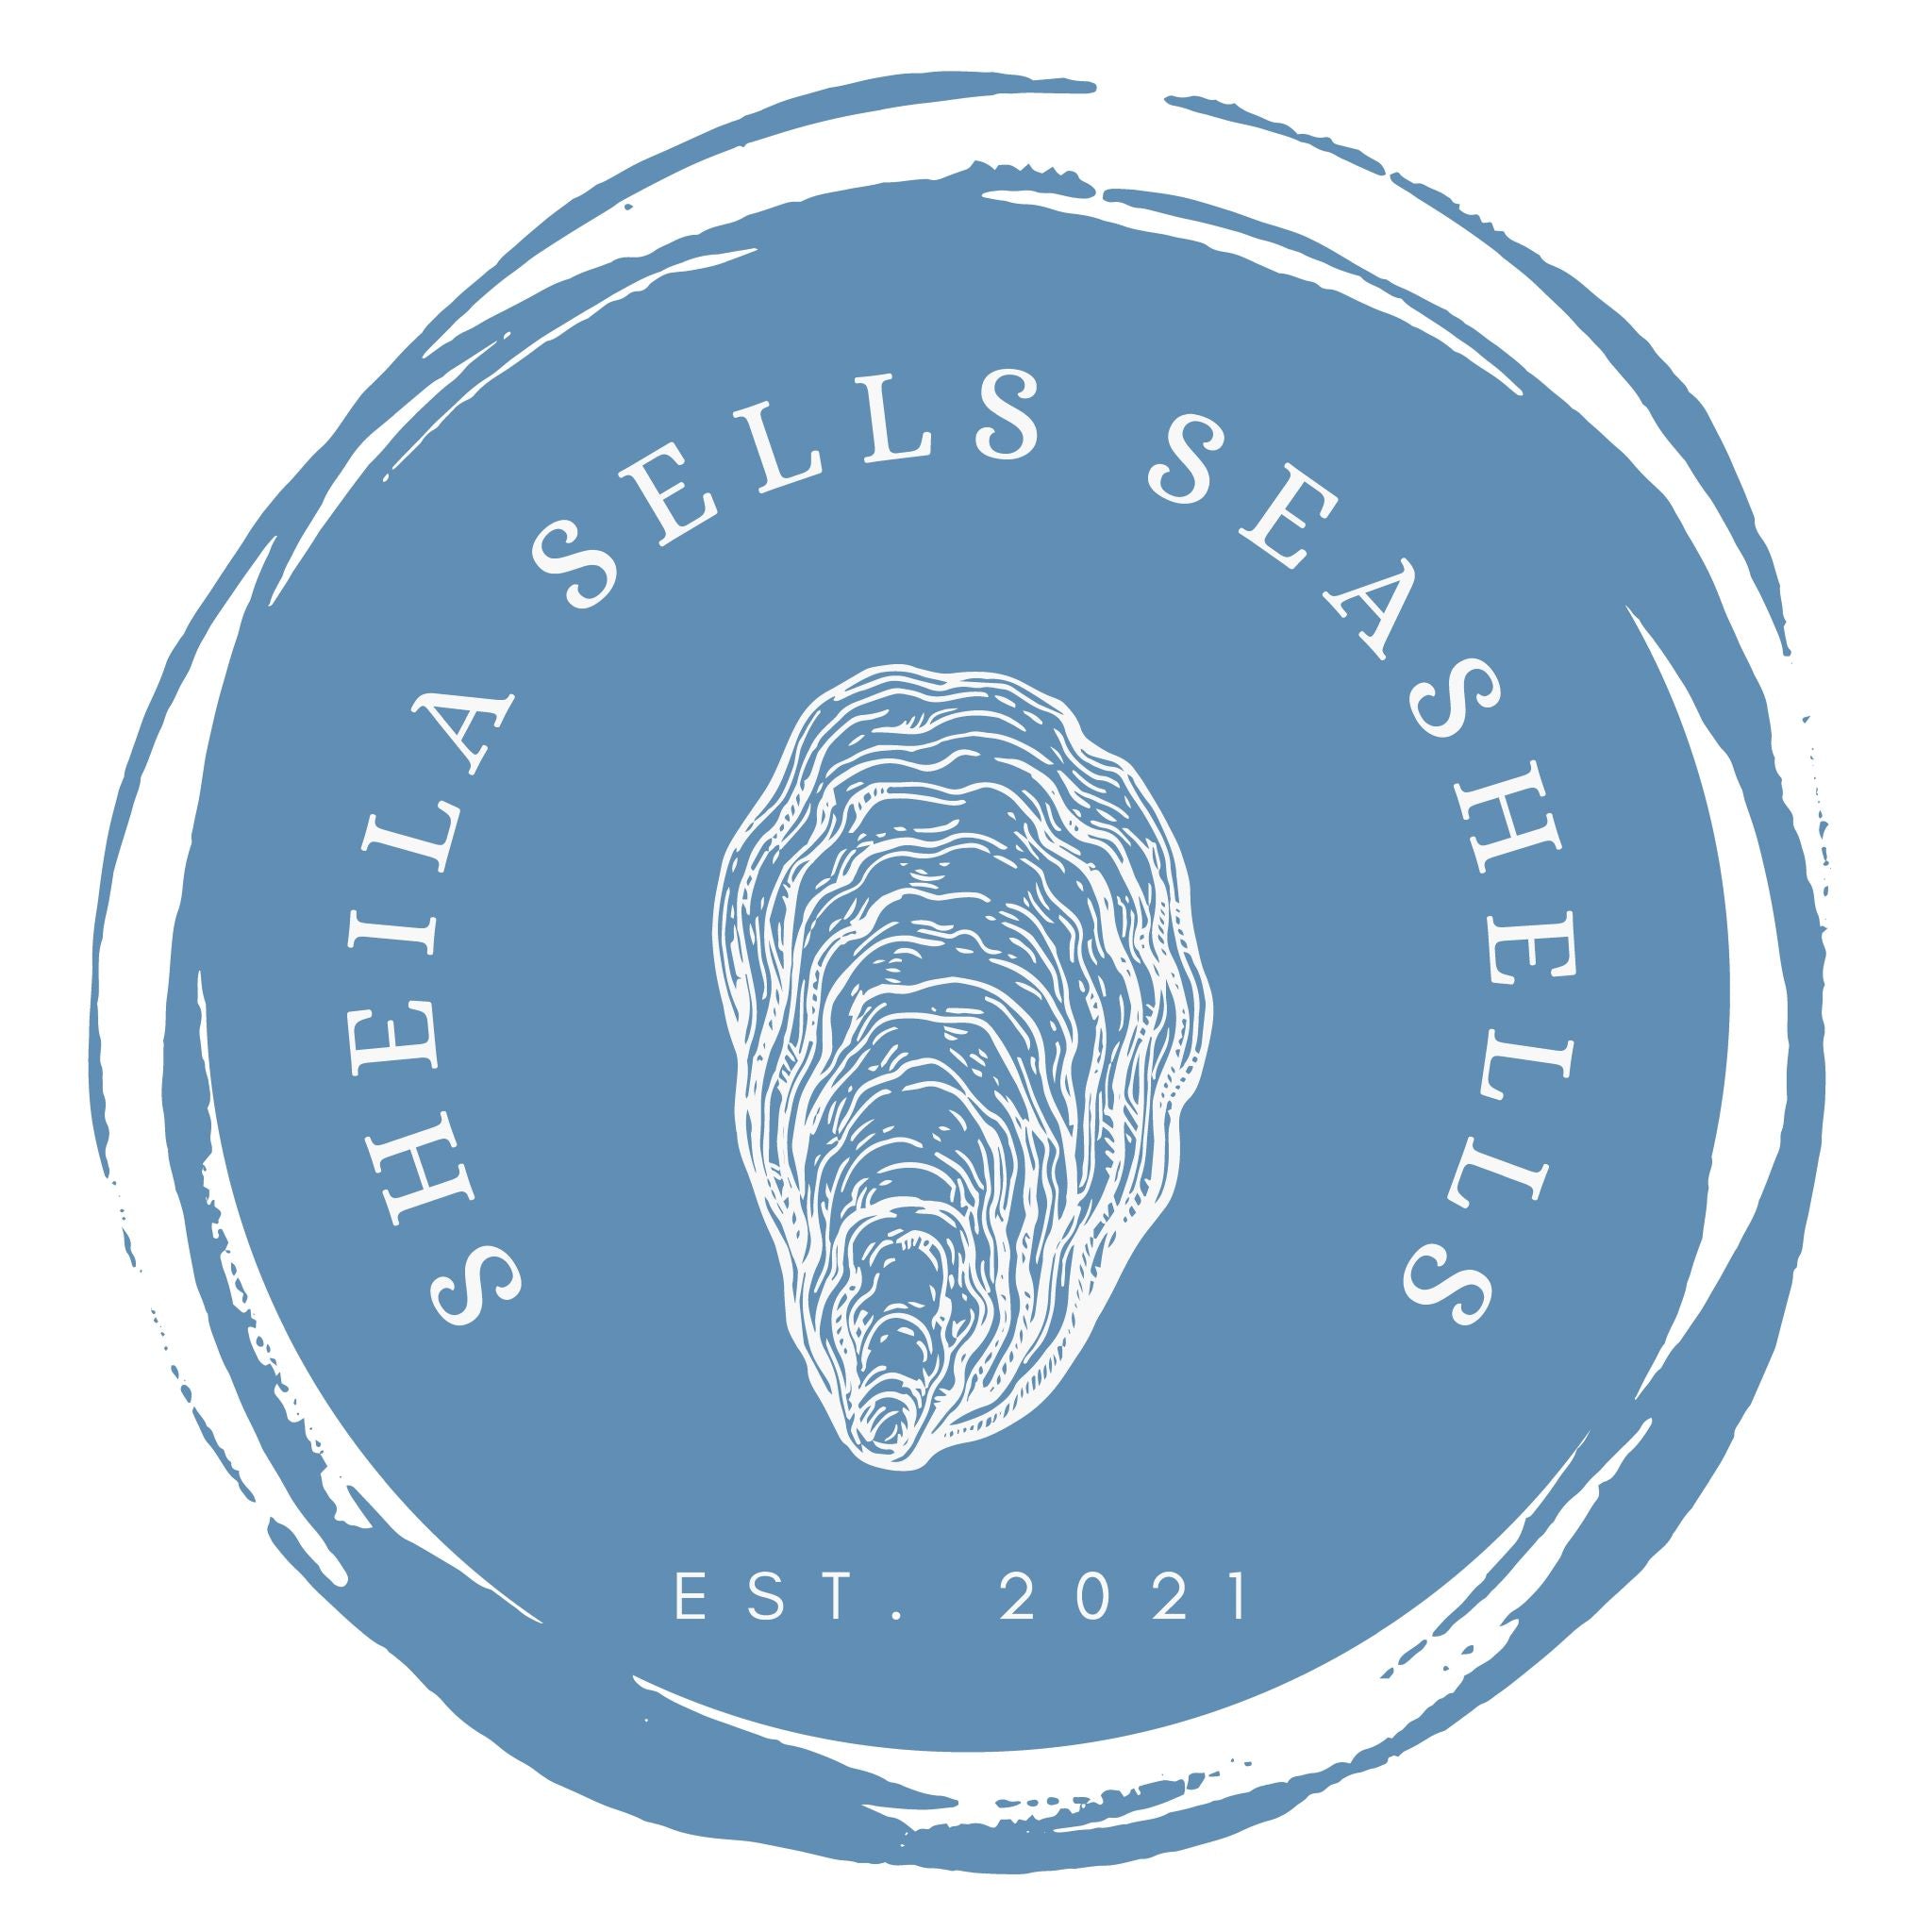 Sheila Sells Seashells